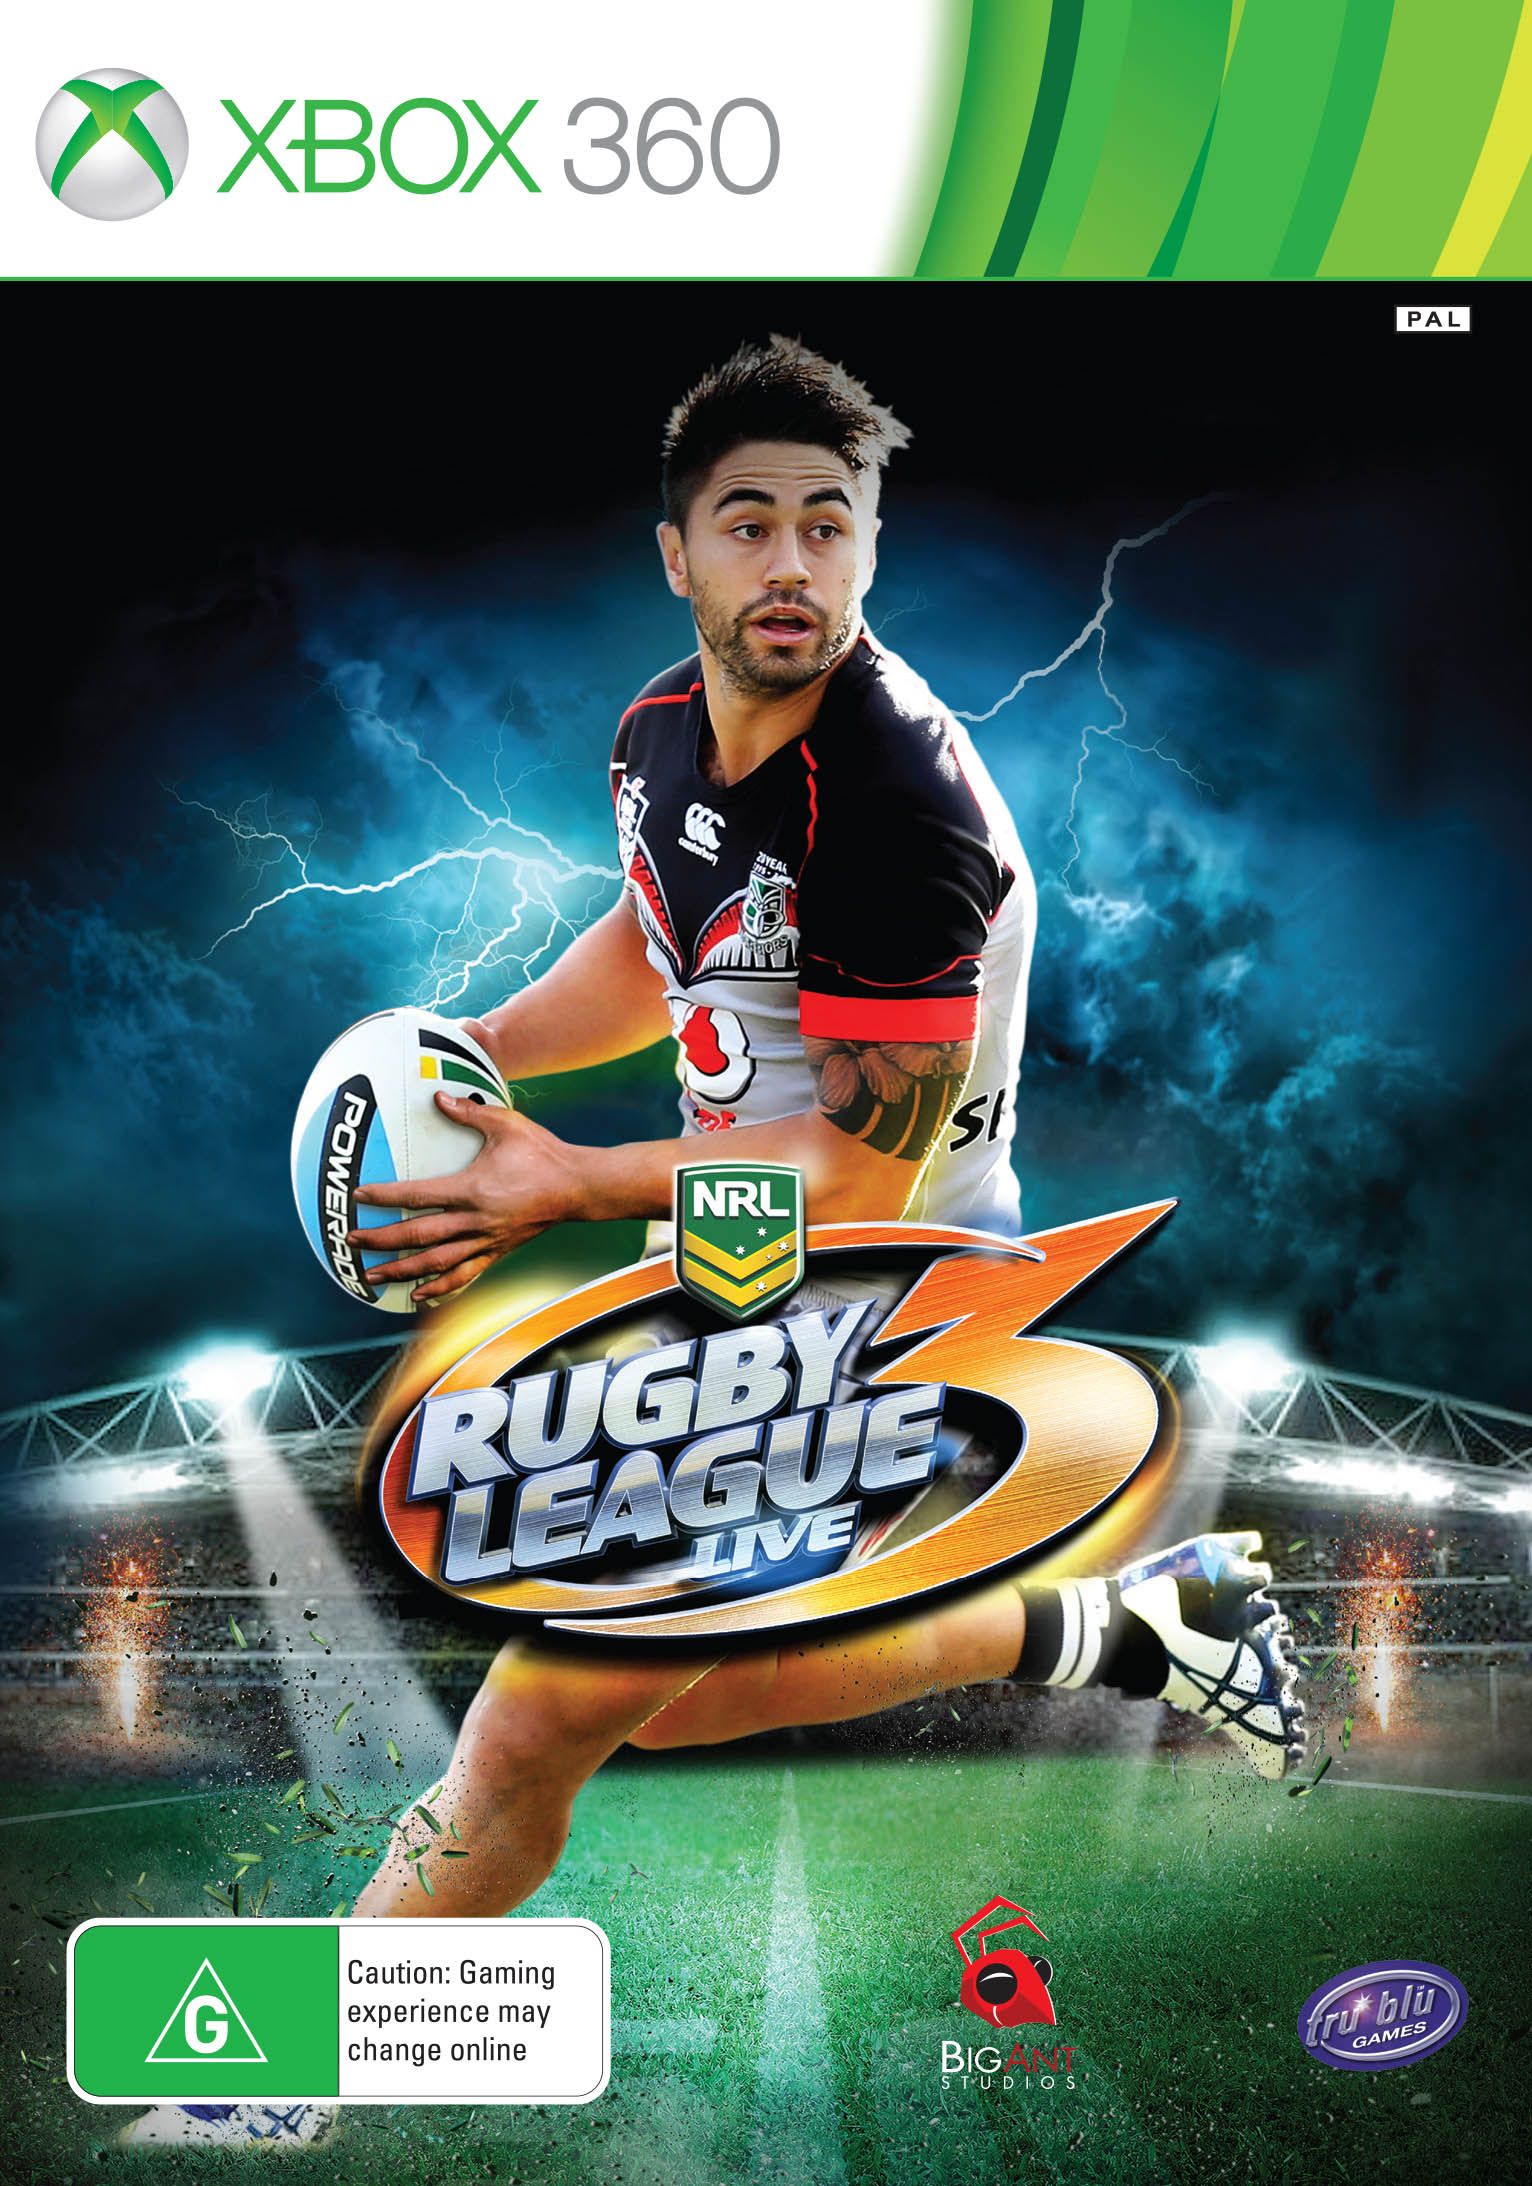 NRL Rugby League Live 3 (Shaun Johnson Cover / NZ Edition) (Xbox 360)